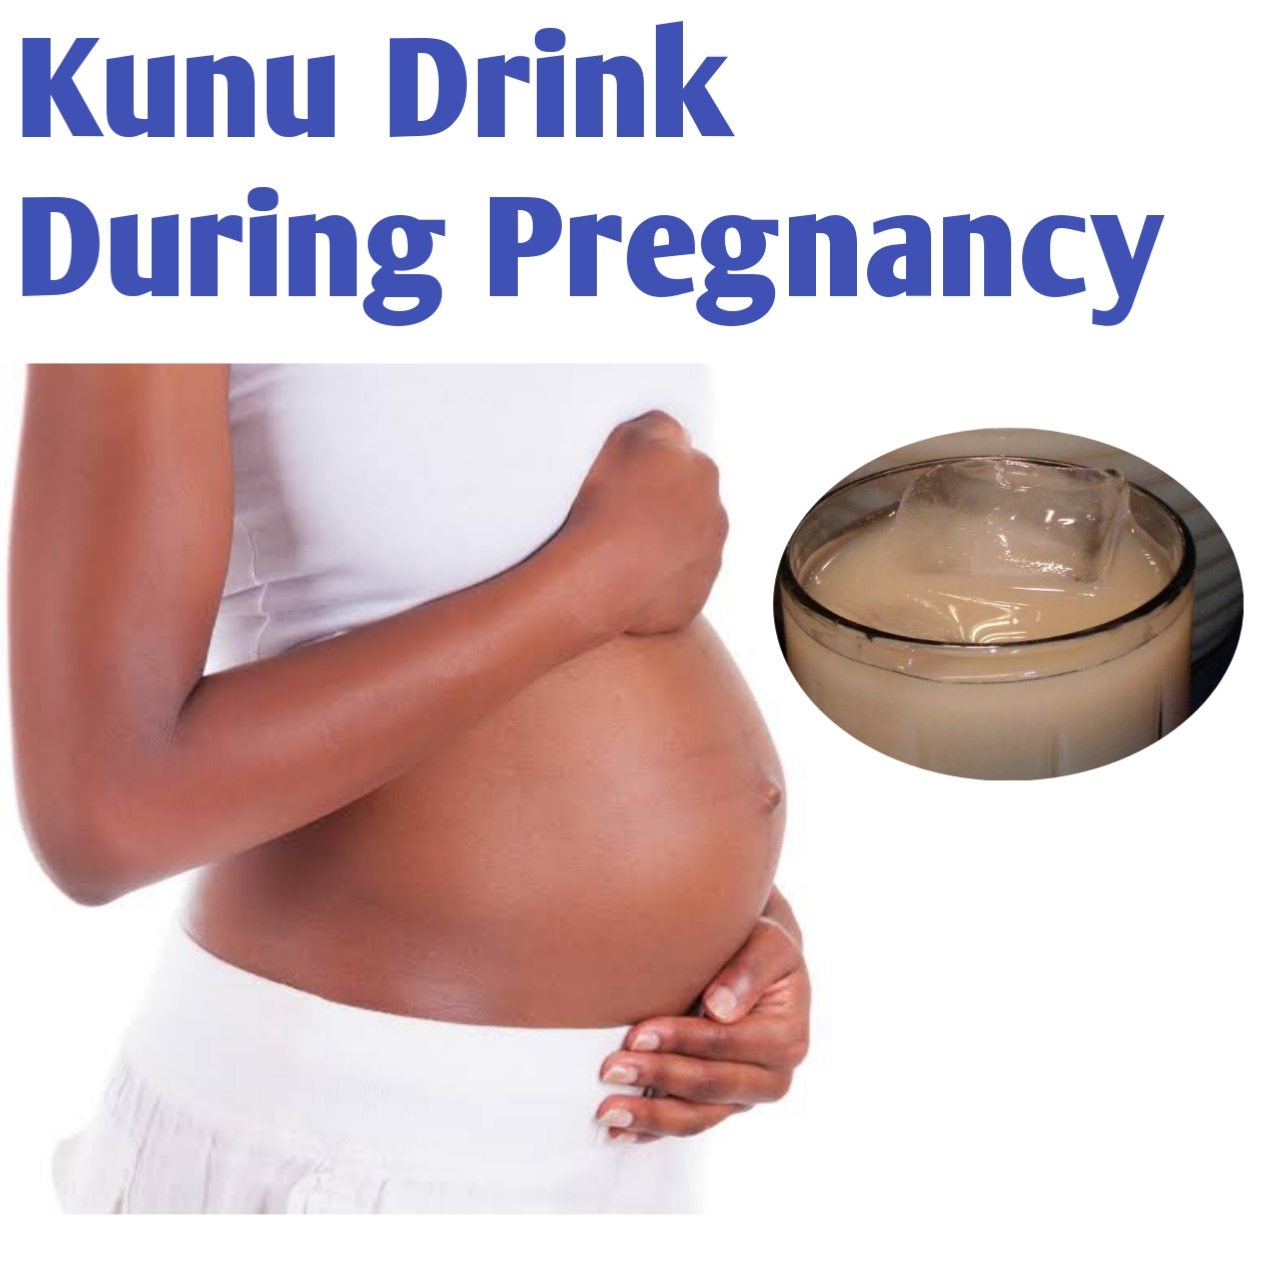 Kunu Drink and Pregnancy